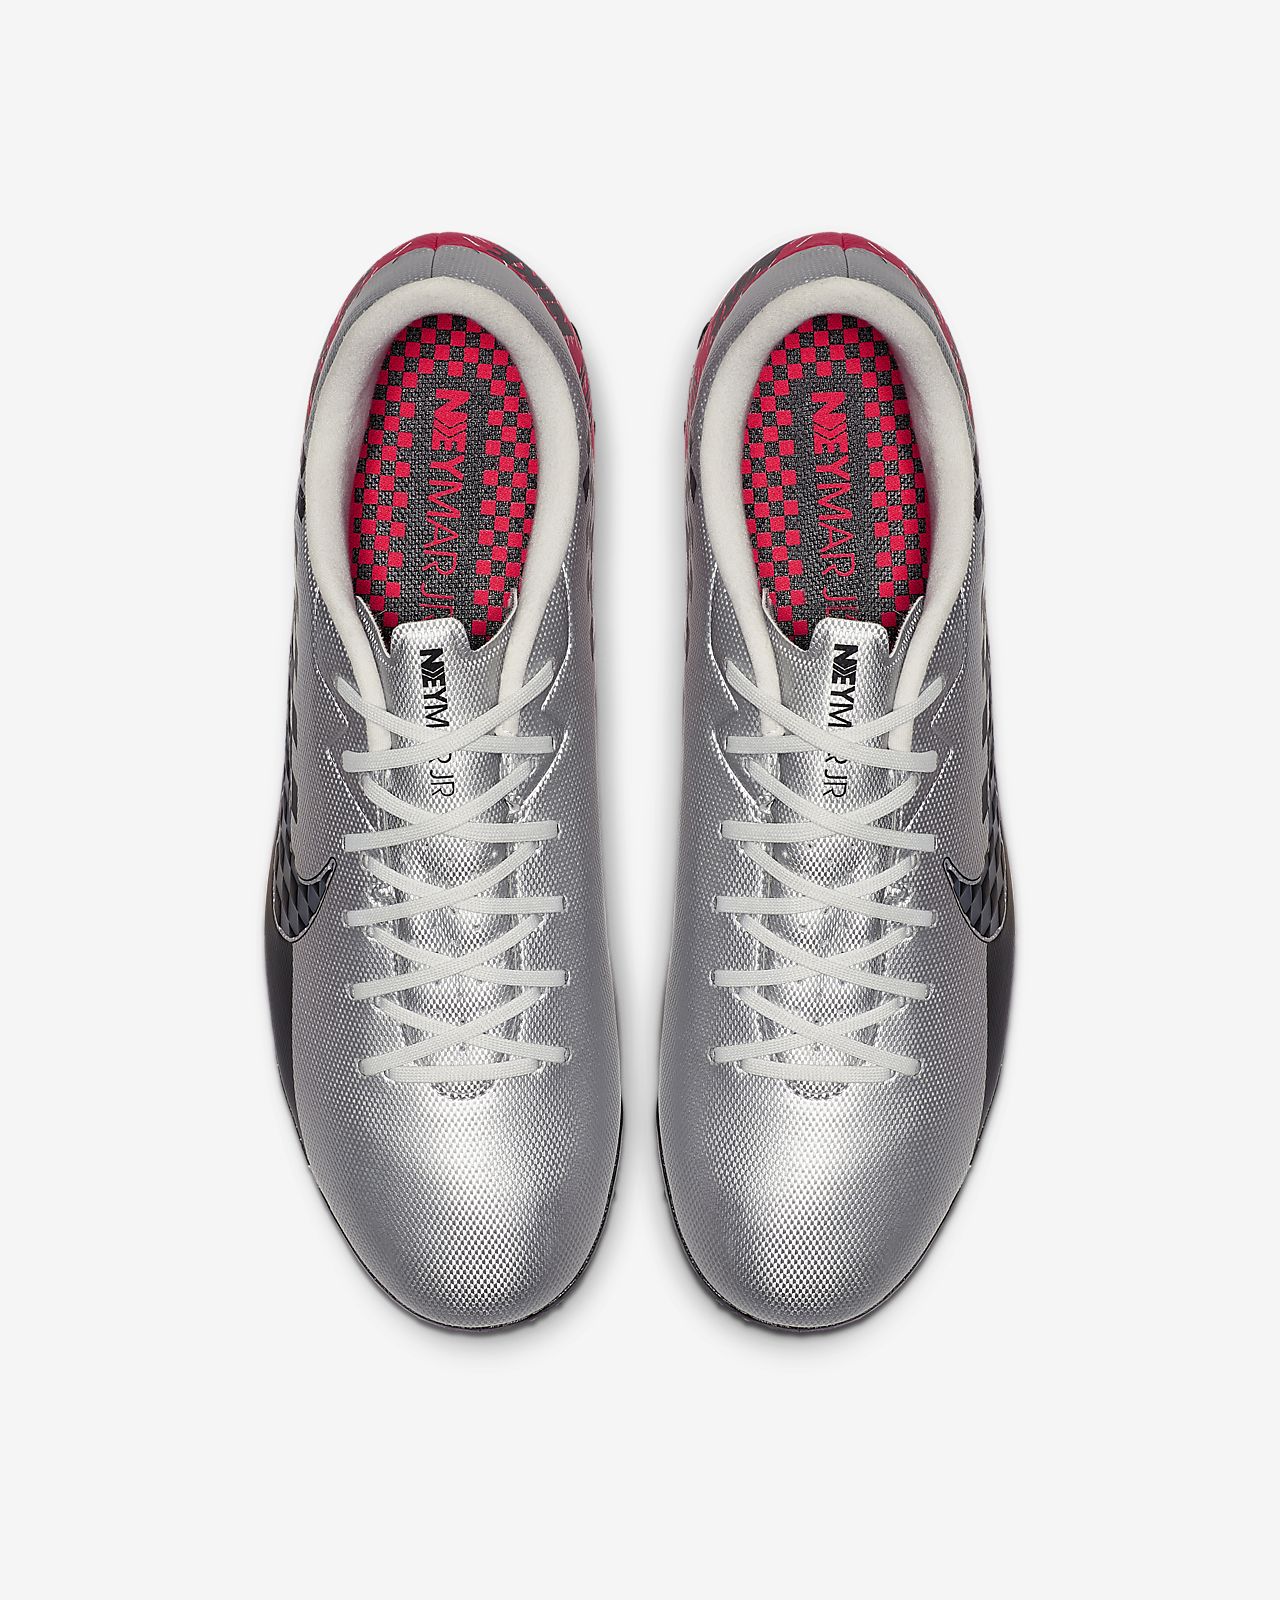 New Nike Mercurial Vapor 12 SG Pro AC Grey Red